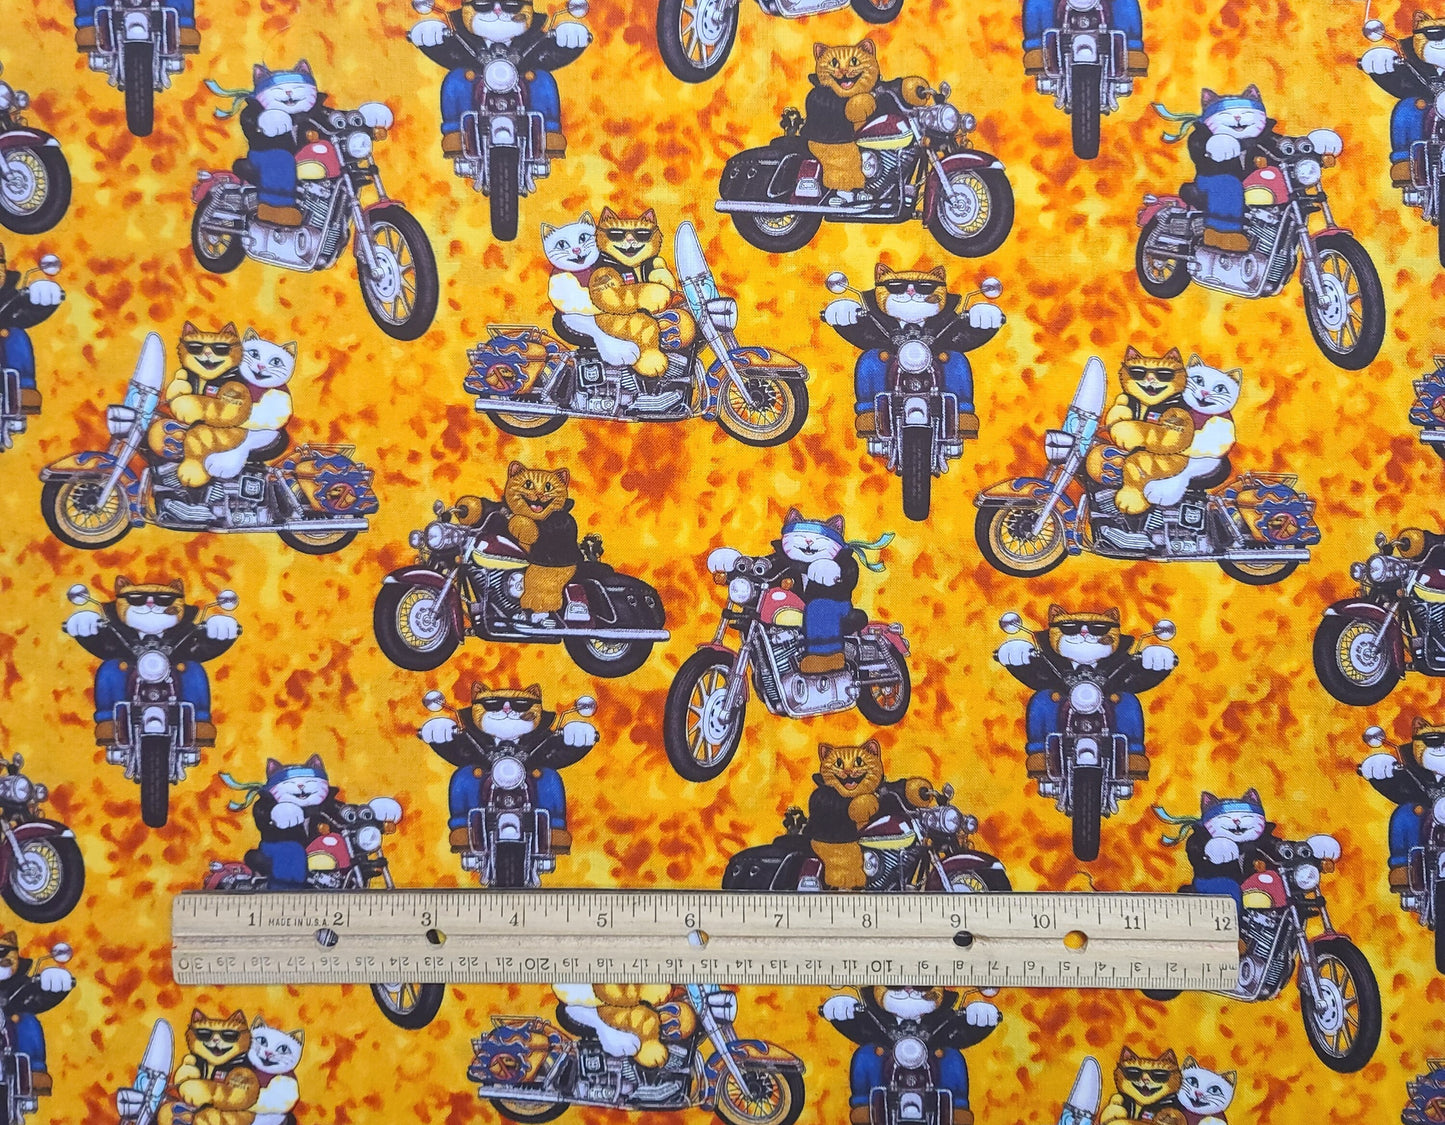 EOB - Dan Morris Cool Cats Design #ADO-10103 - Orange Tonal Fabric / Cartoon-Style Cats on Motorcycles